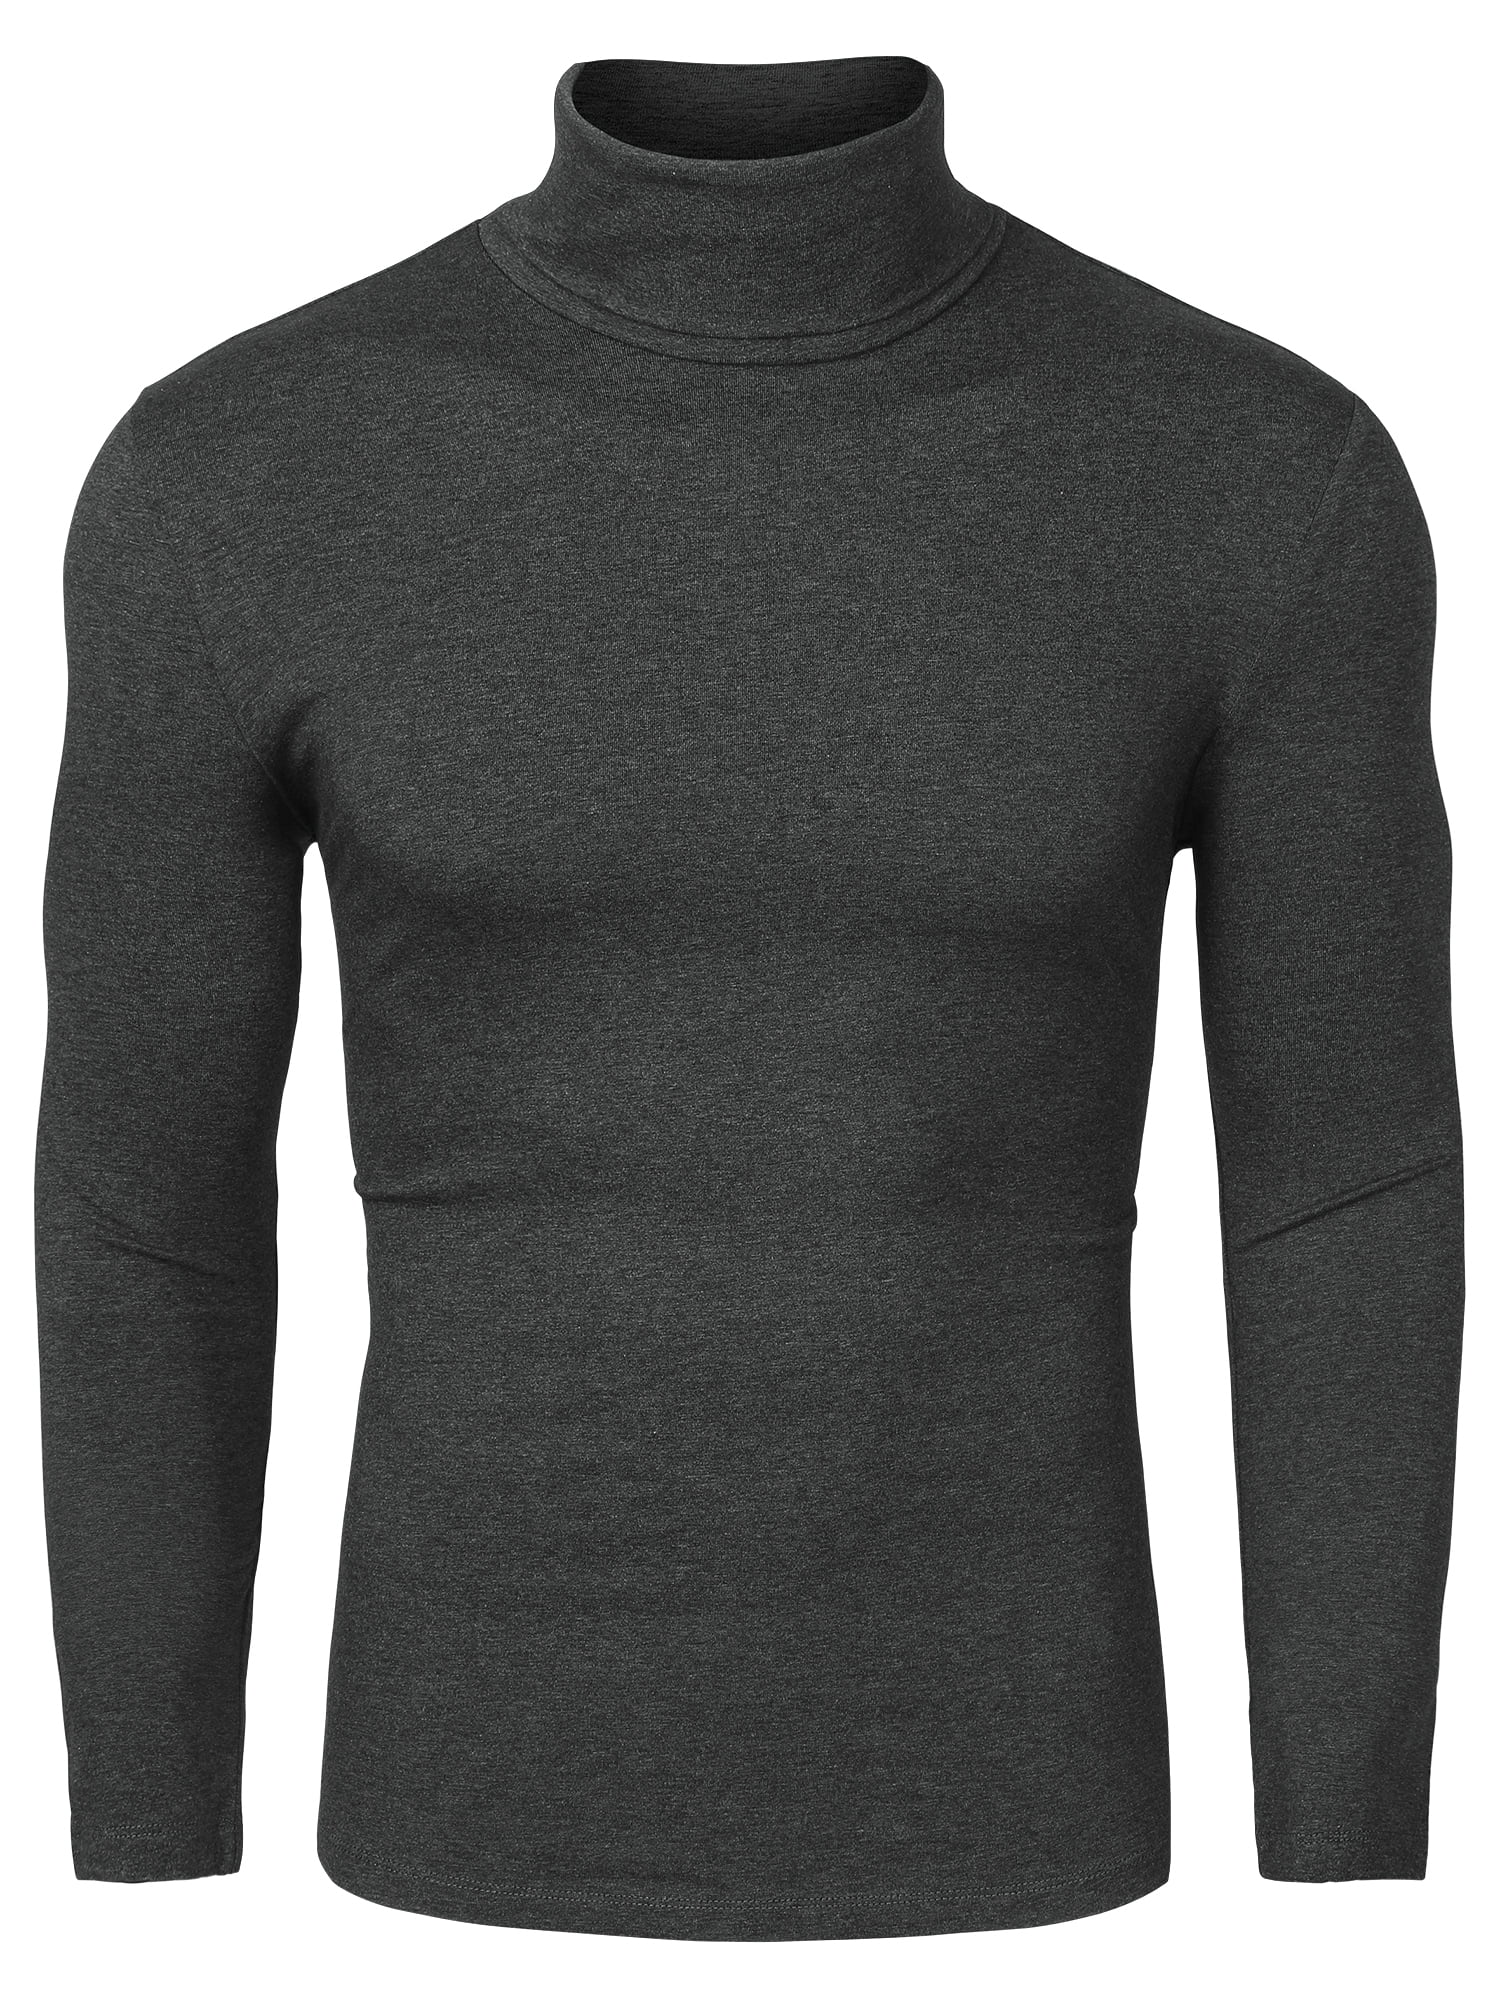 Men's Slim Fit Lightweight Long Sleeve Pullover Top Turtleneck T-shirt ...